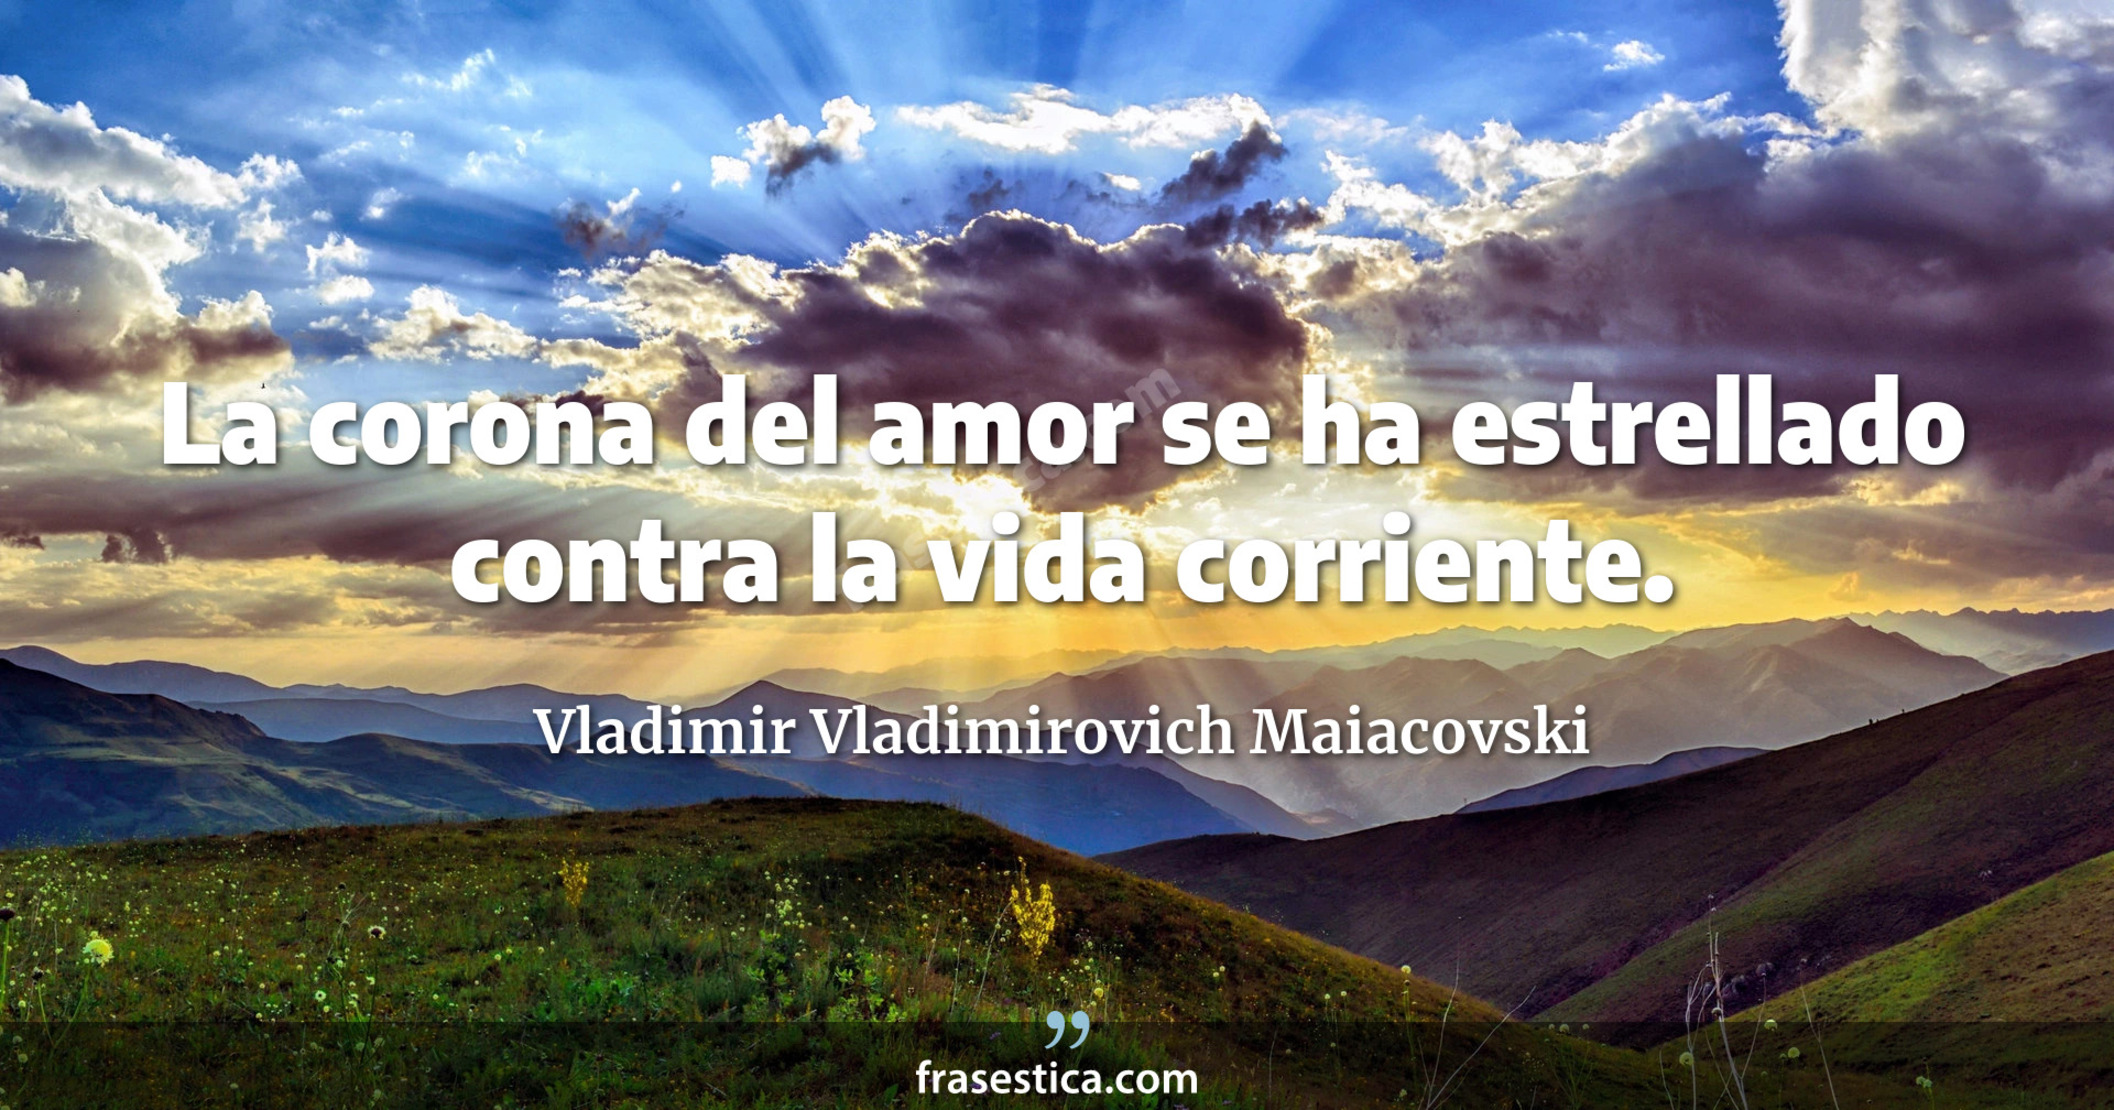 La corona del amor se ha estrellado contra la vida corriente. - Vladimir Vladimirovich Maiacovski